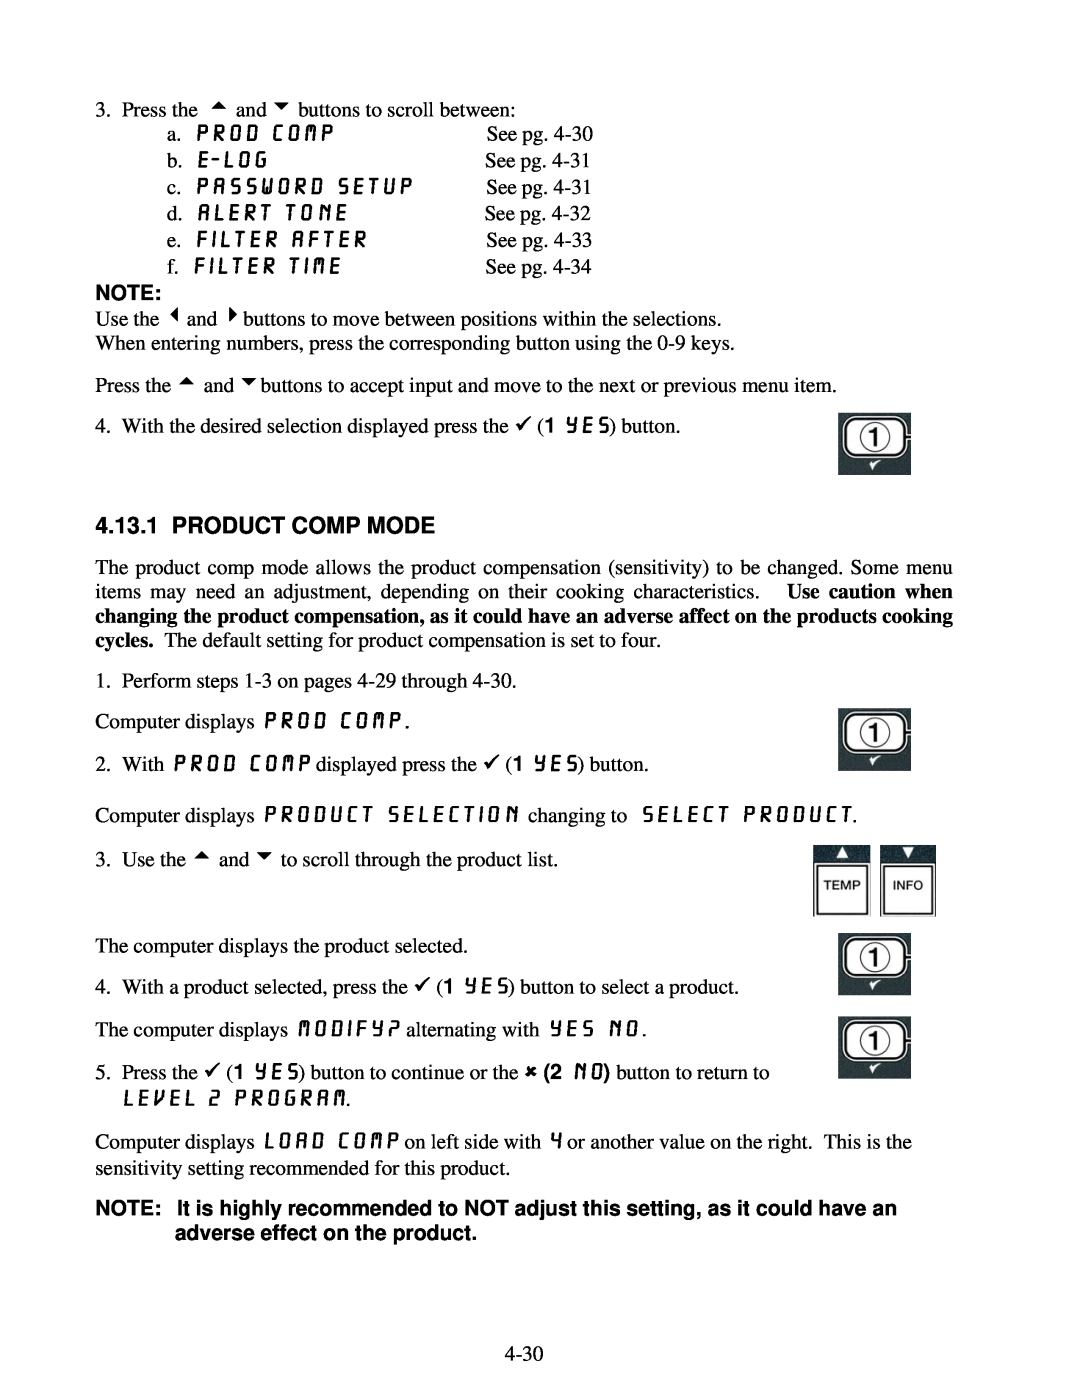 Frymaster BIGLA30 warranty Product Comp Mode, a. Prod comp, b. e-log, c. password SETUP, d. alert tone, e. filter After 